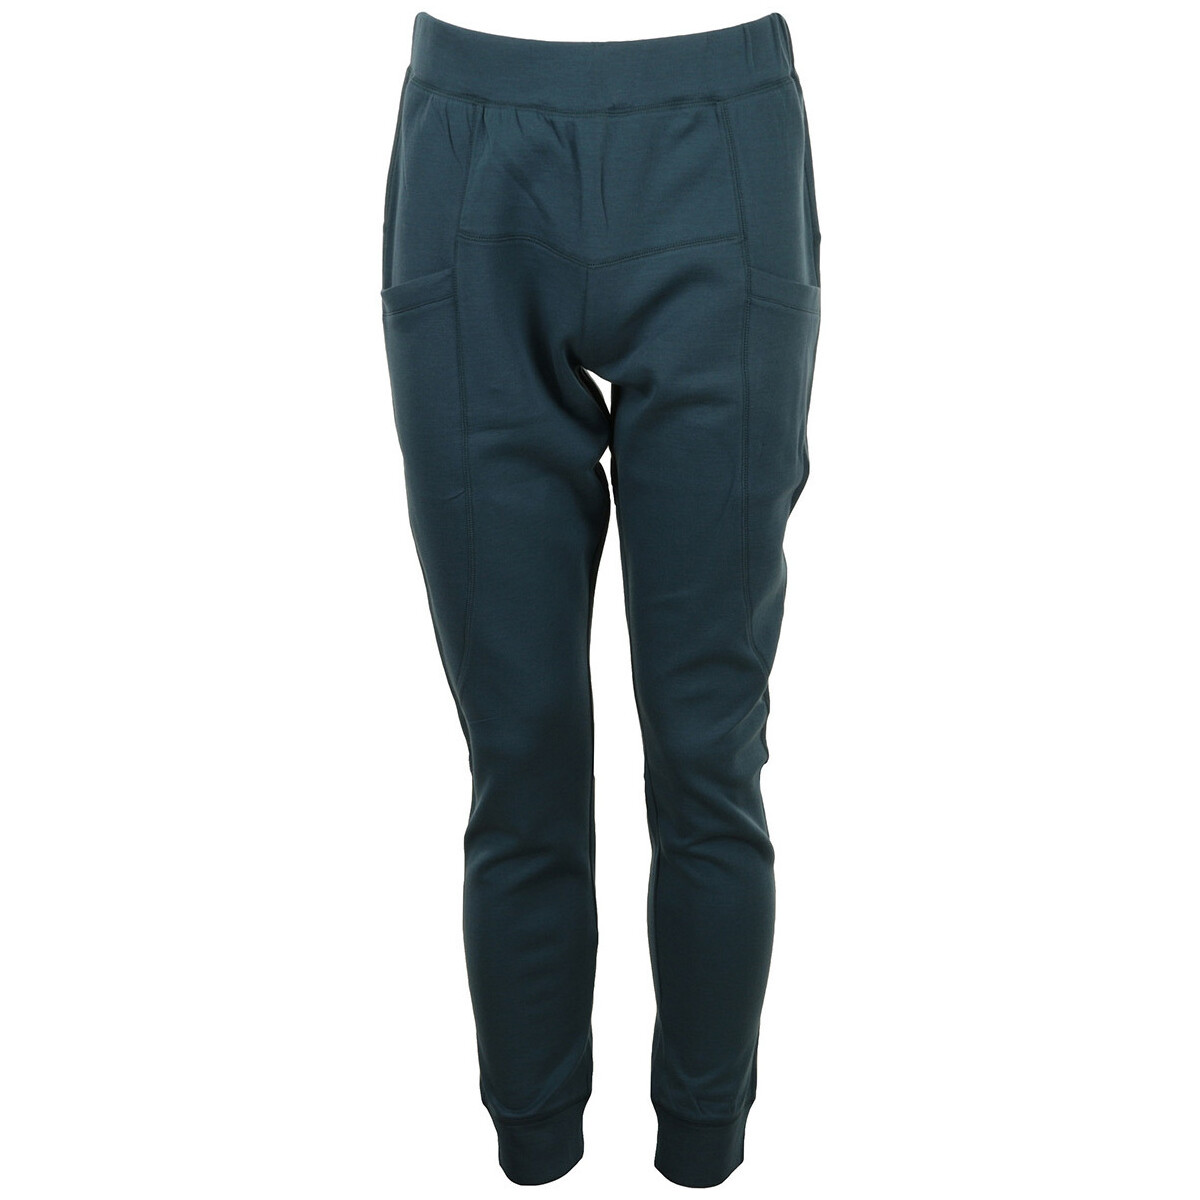 Textiel Heren Broeken / Pantalons Hamilton And Hare Box Jogger Sweat Blauw